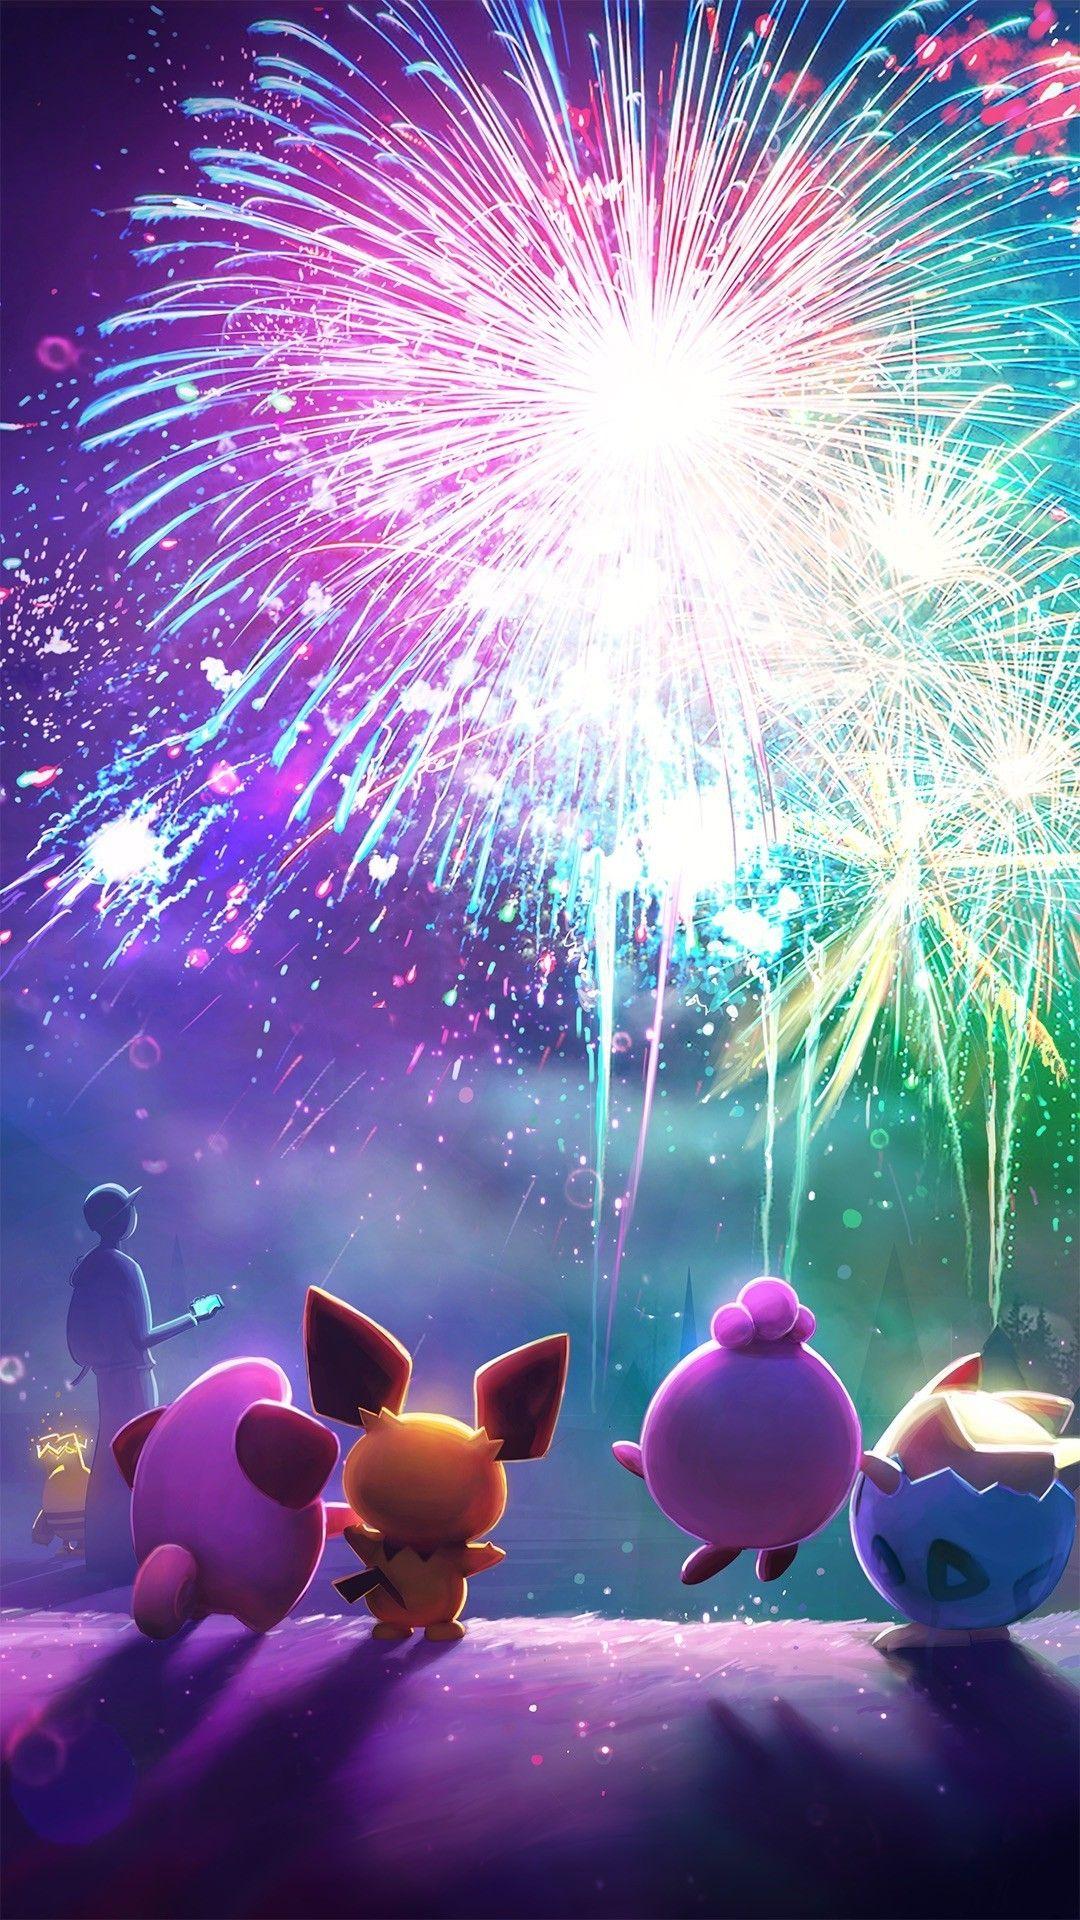 Official Pokémon Go wallpaper for 2018